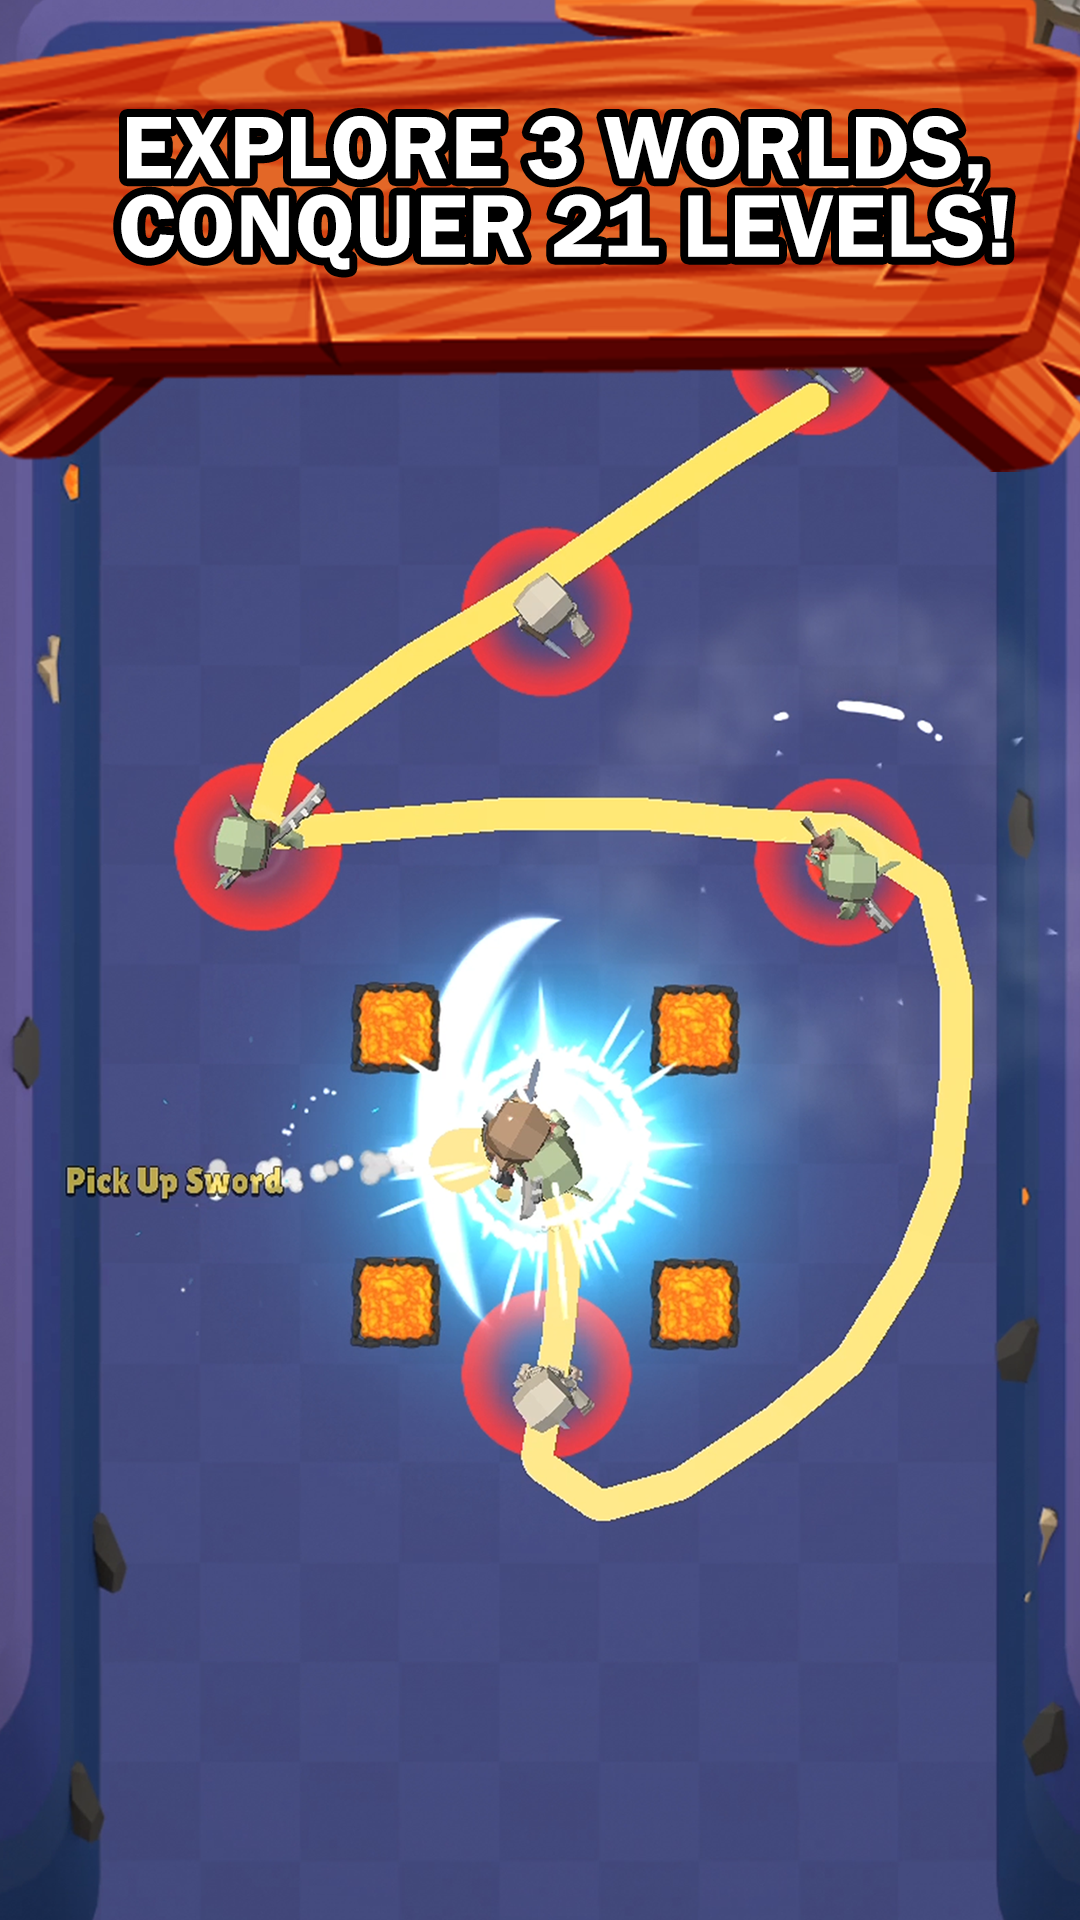 Echo Blade screenshot game